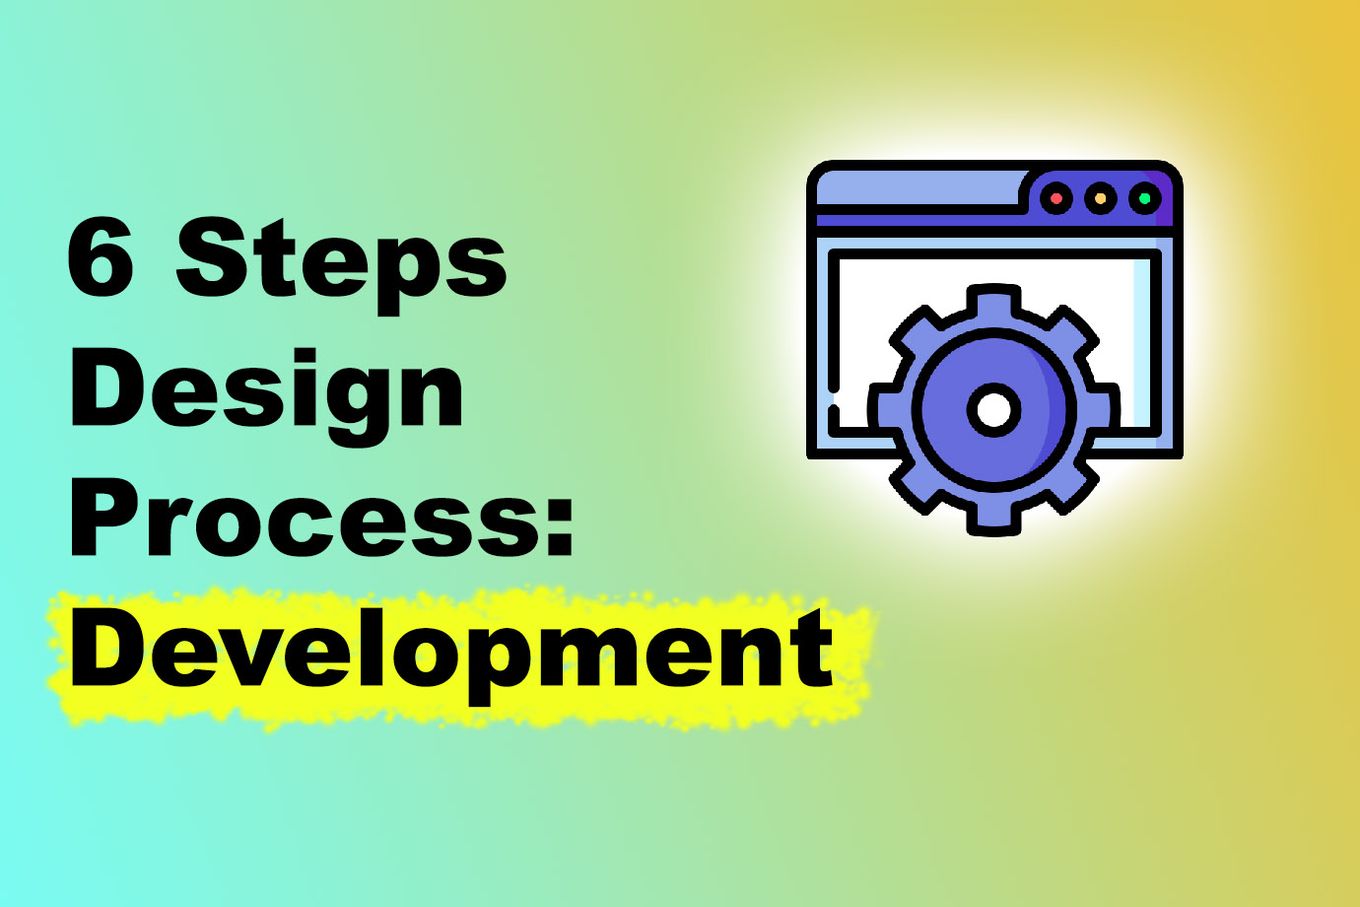 6 Steps Design Process, Development